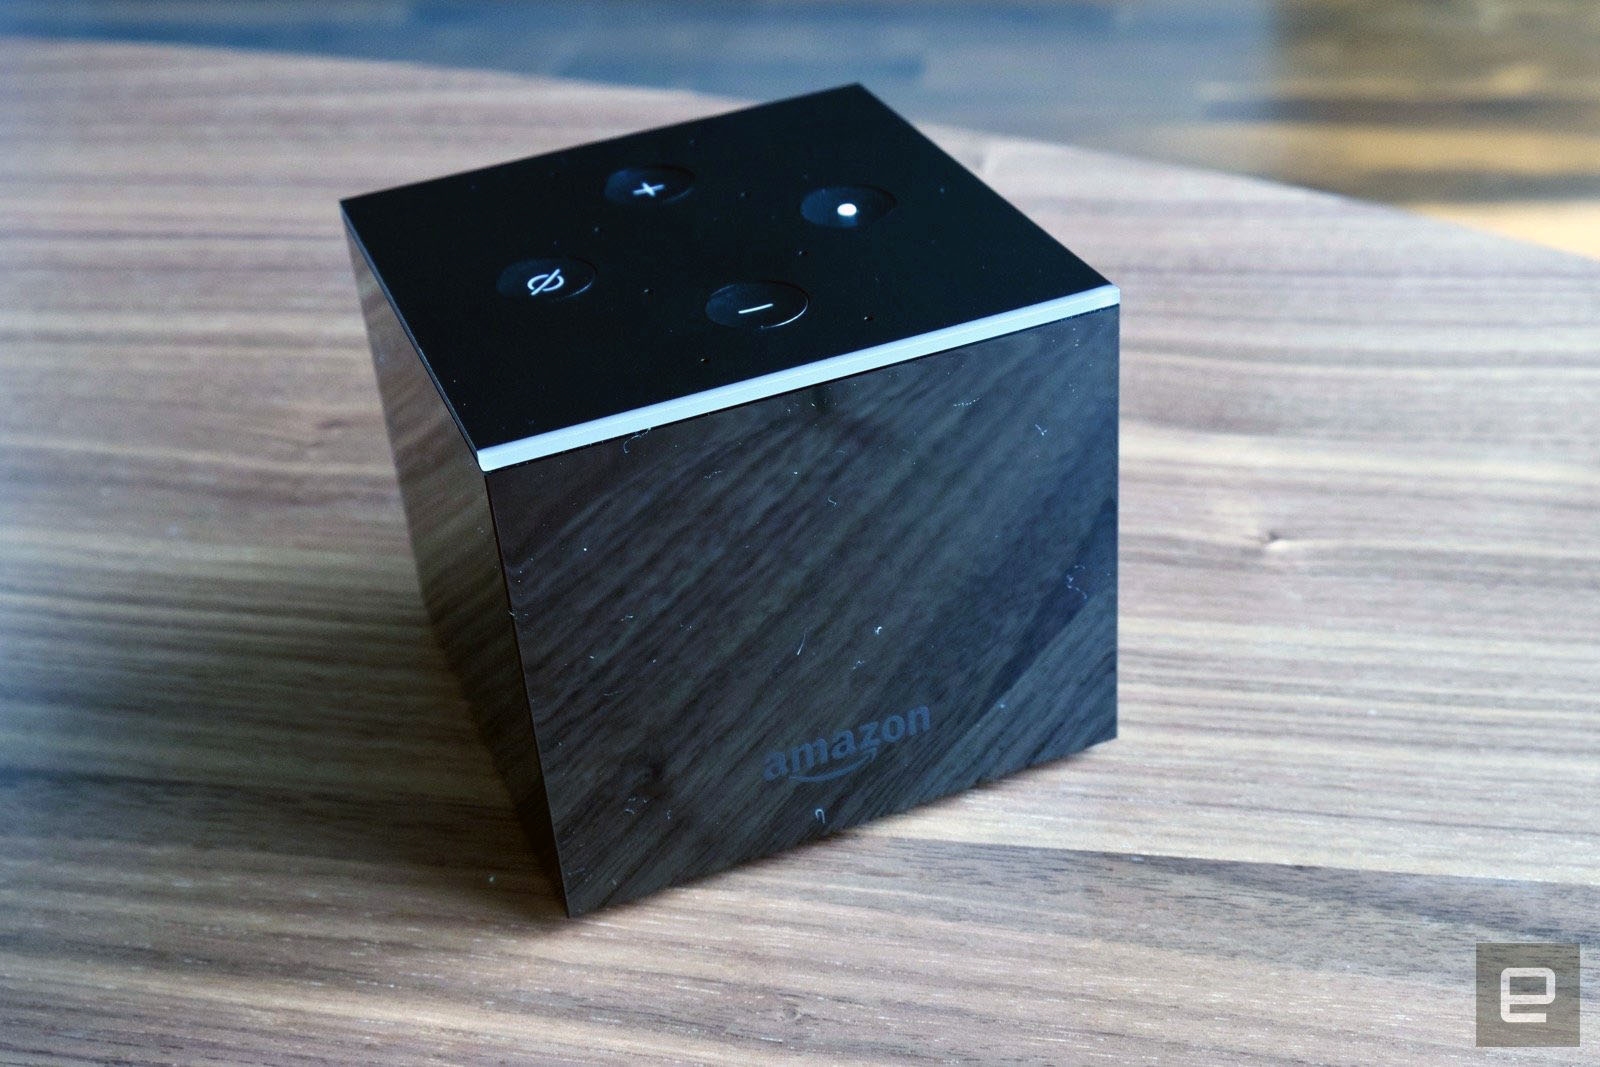 Alexa voice control arrives for select DirecTV set-top boxes | DeviceDaily.com